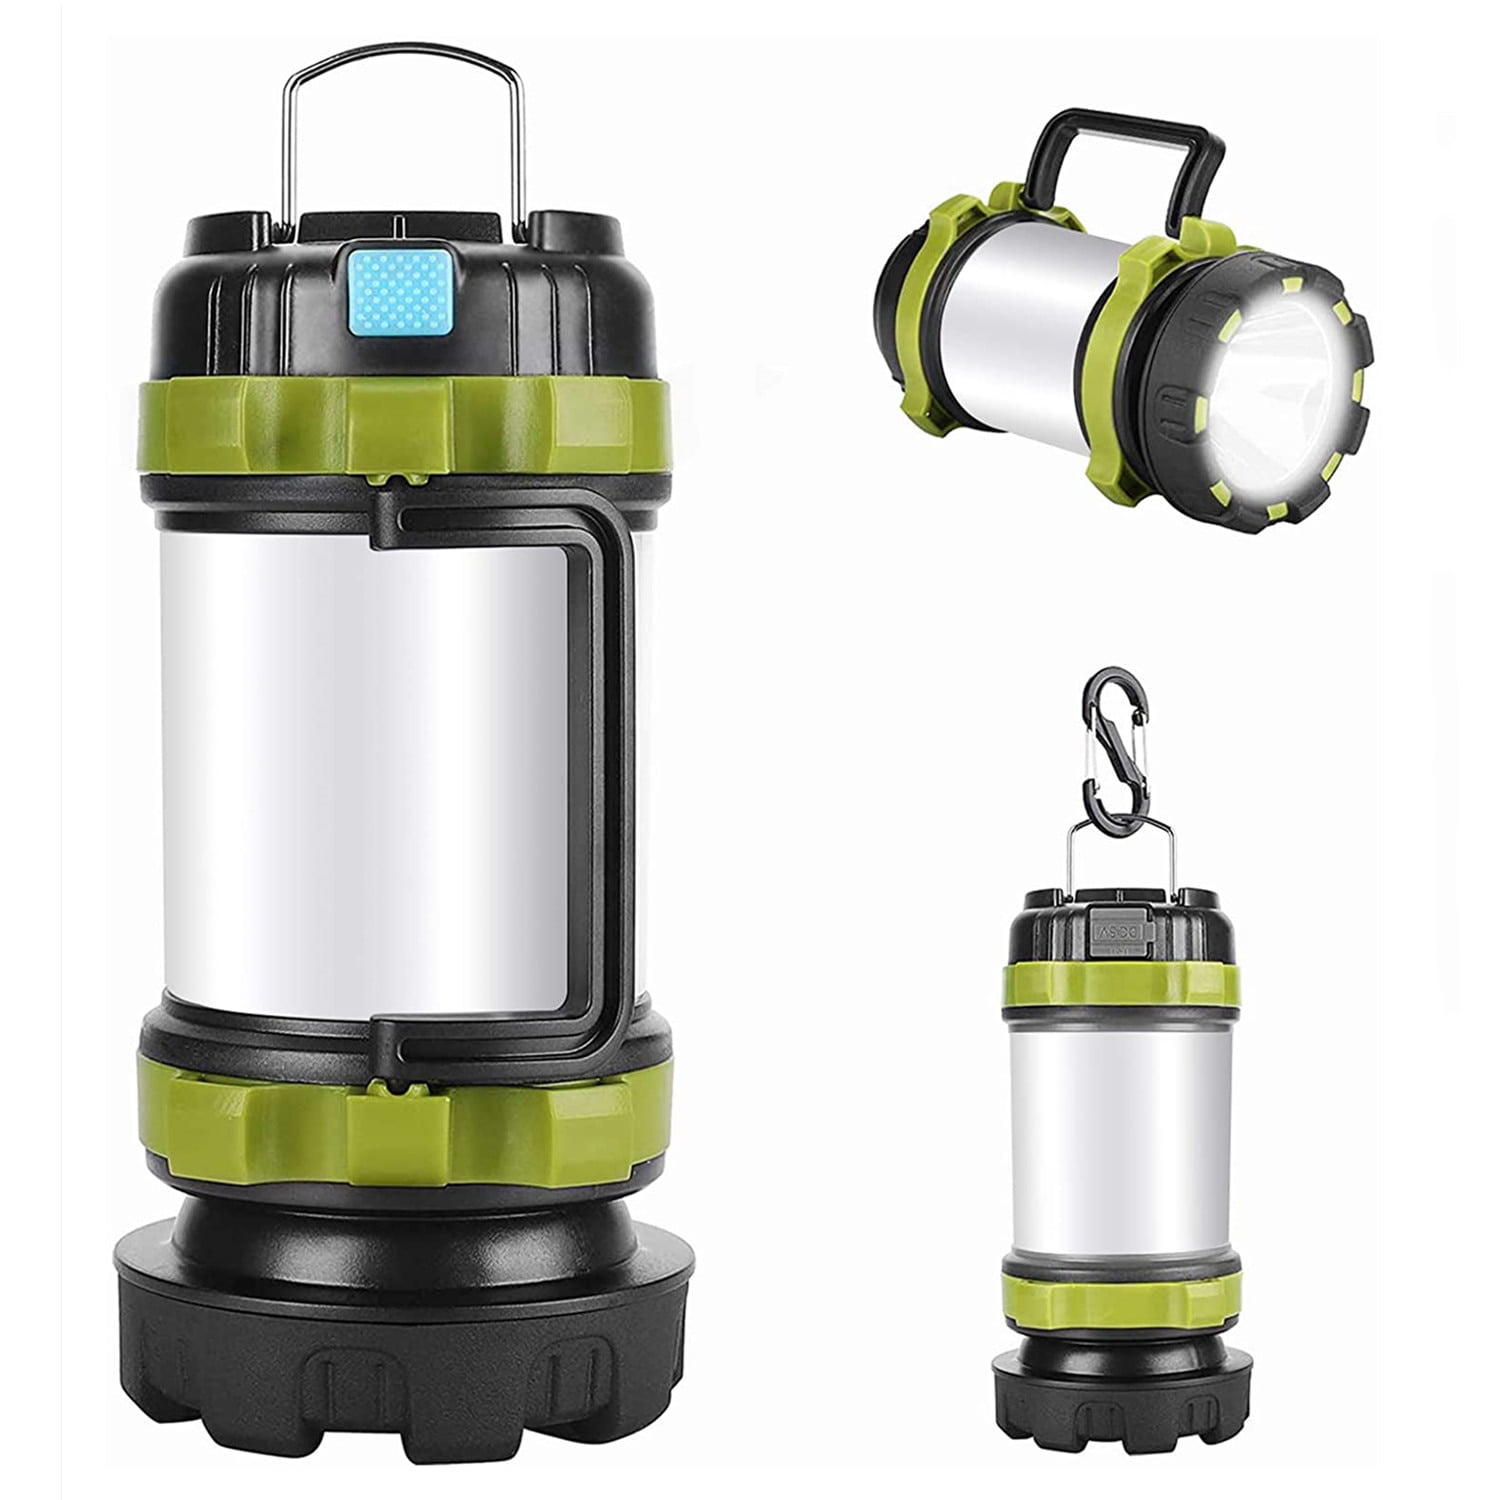 Rechargeable Lantern Flashlight with 4 Light Modes & 3600mAh Power Bank Portable Camping Light for Daily/Camping/Hurricane/Emergency/Hiking/Night Fishing Censinda LED Camping Lantern 